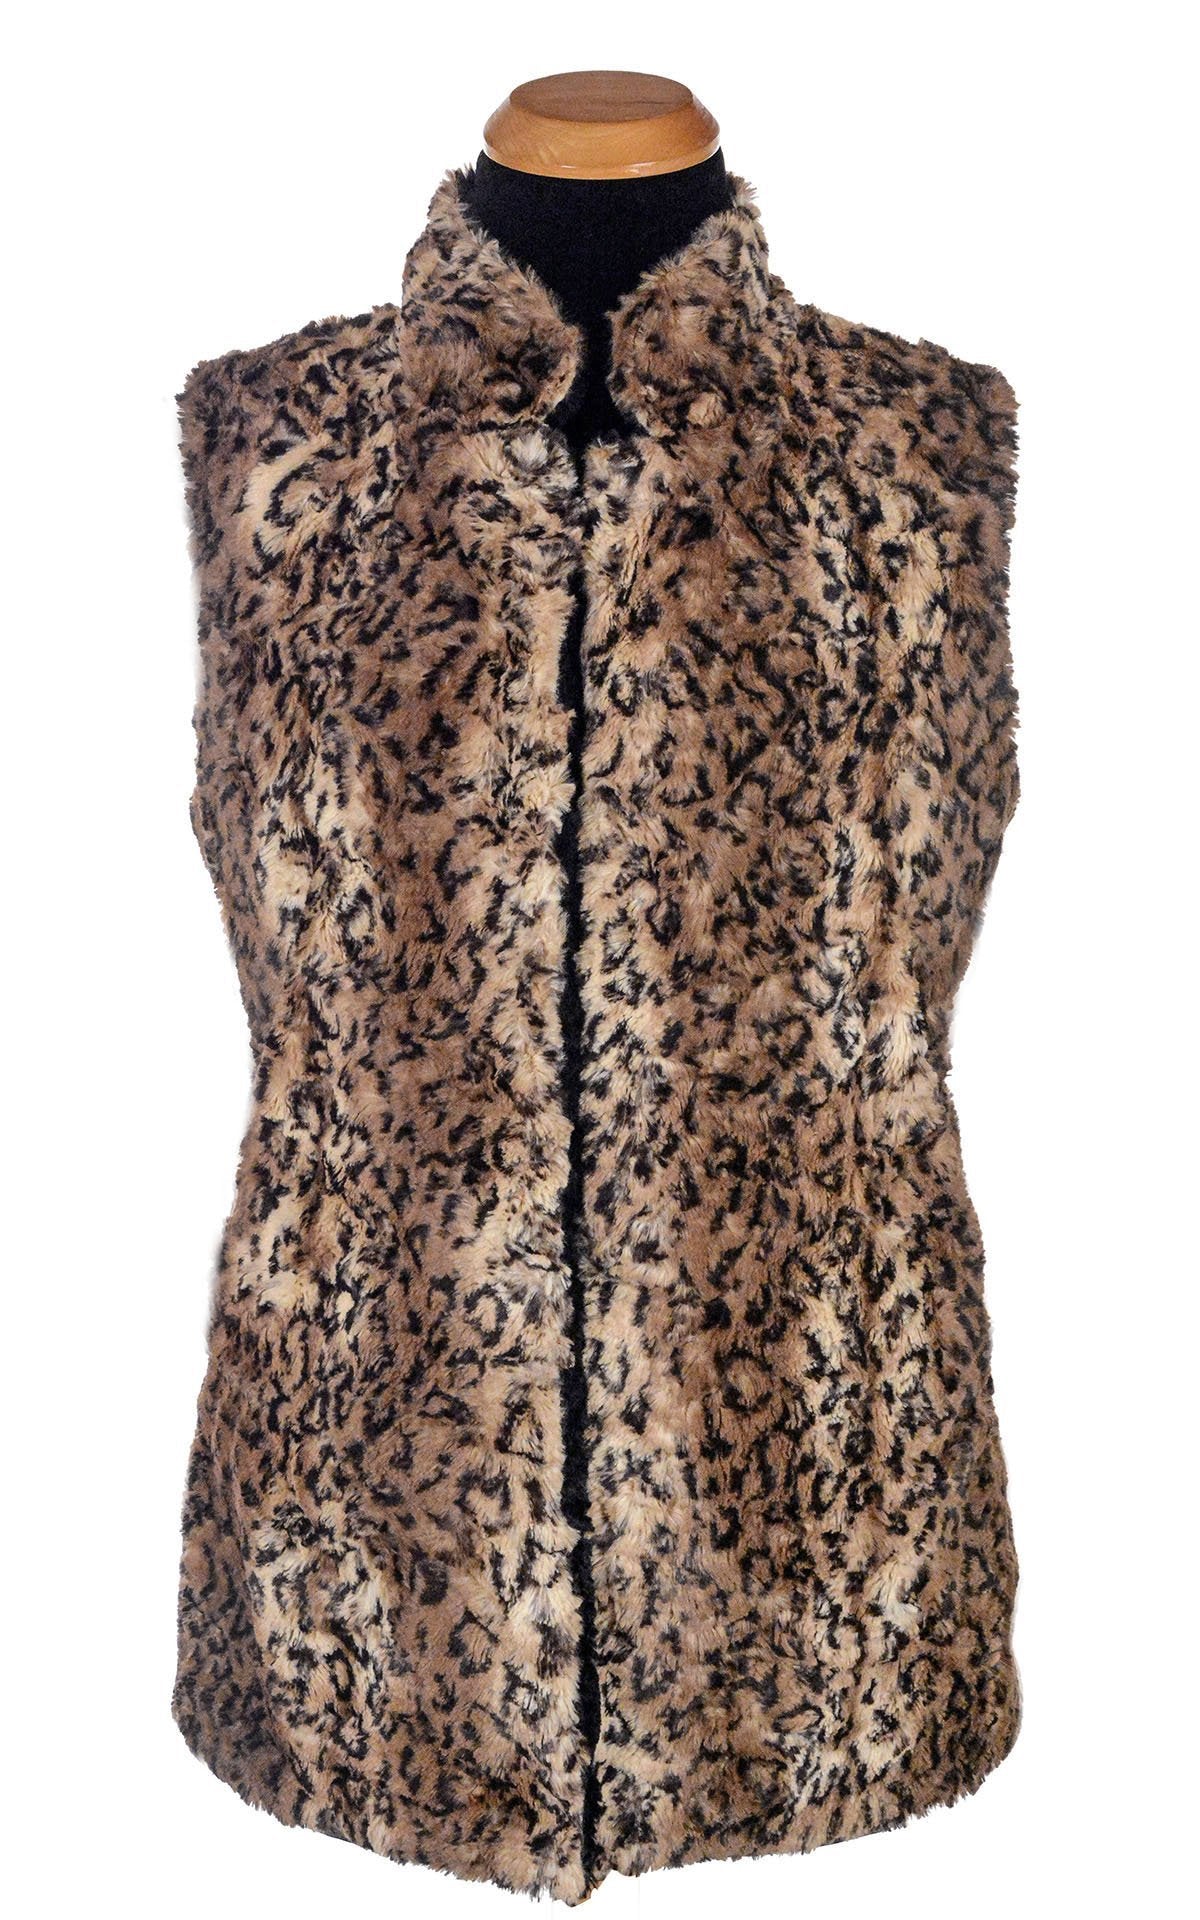 Mandarin Vest Short, Reversible less pockets - Luxury Faux Fur in Carpathian Lynx with Cuddly Fur in Black